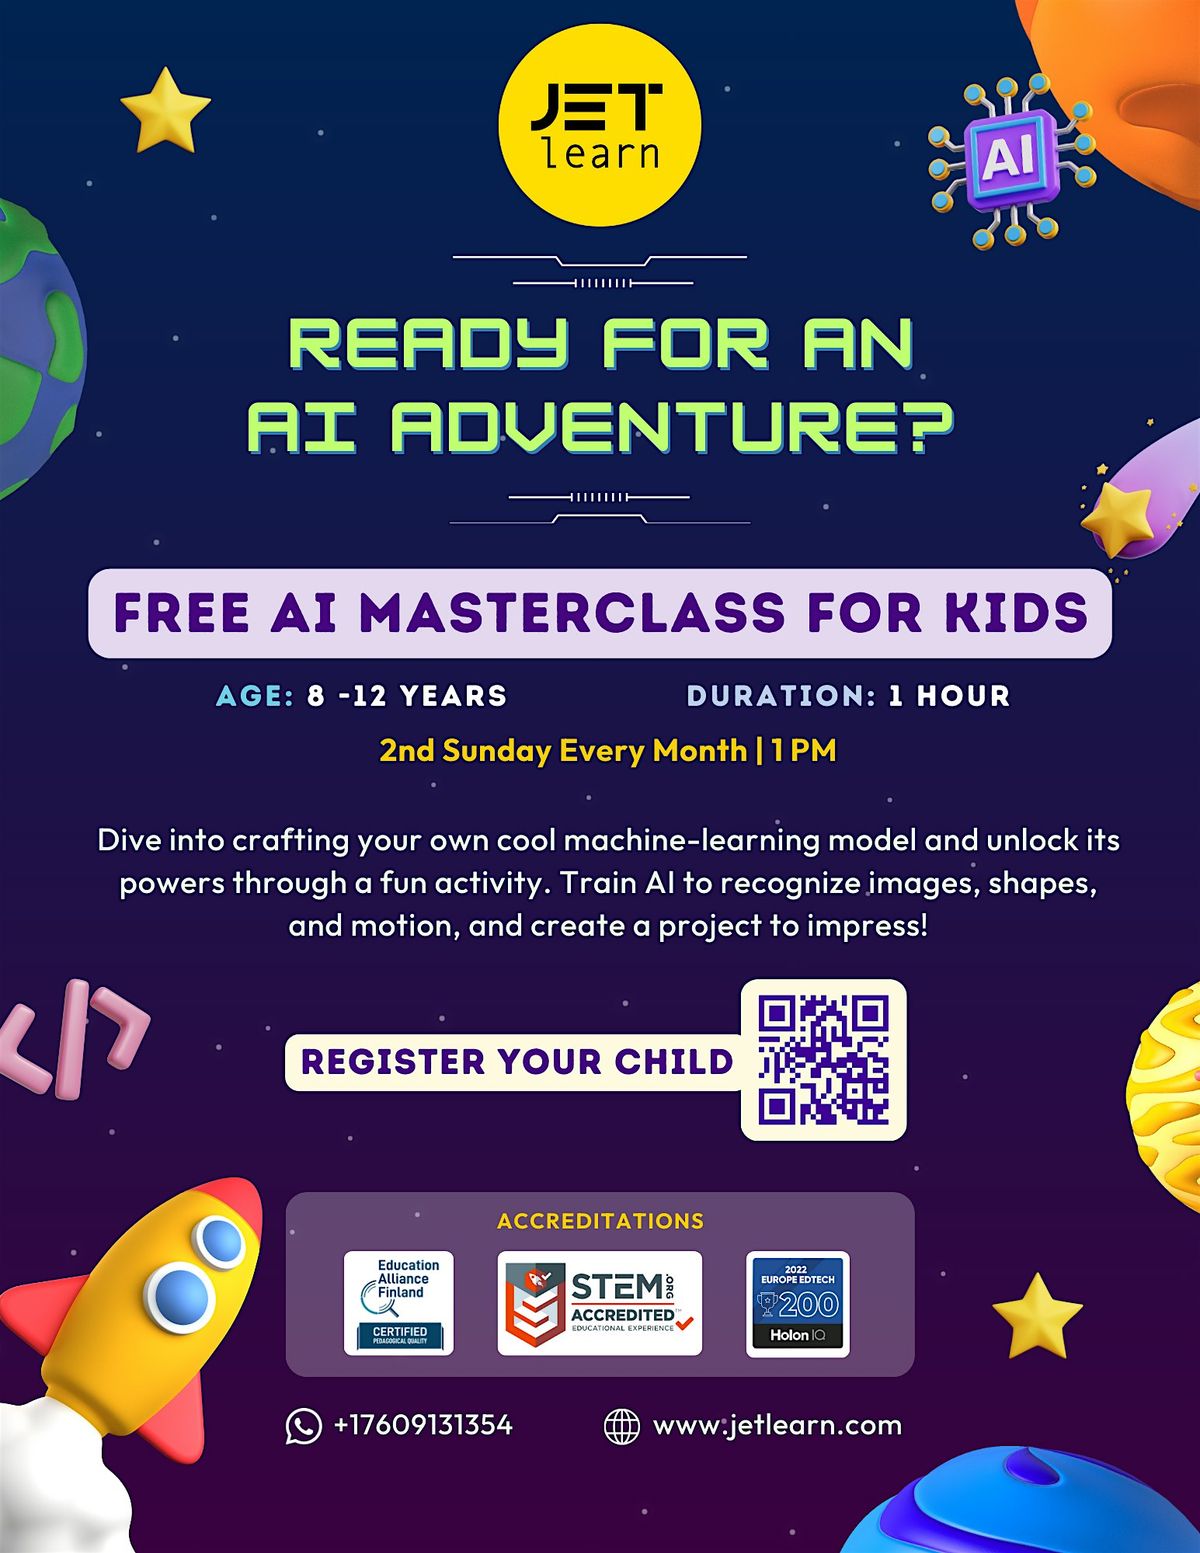 Free AI Masterclass for Kids